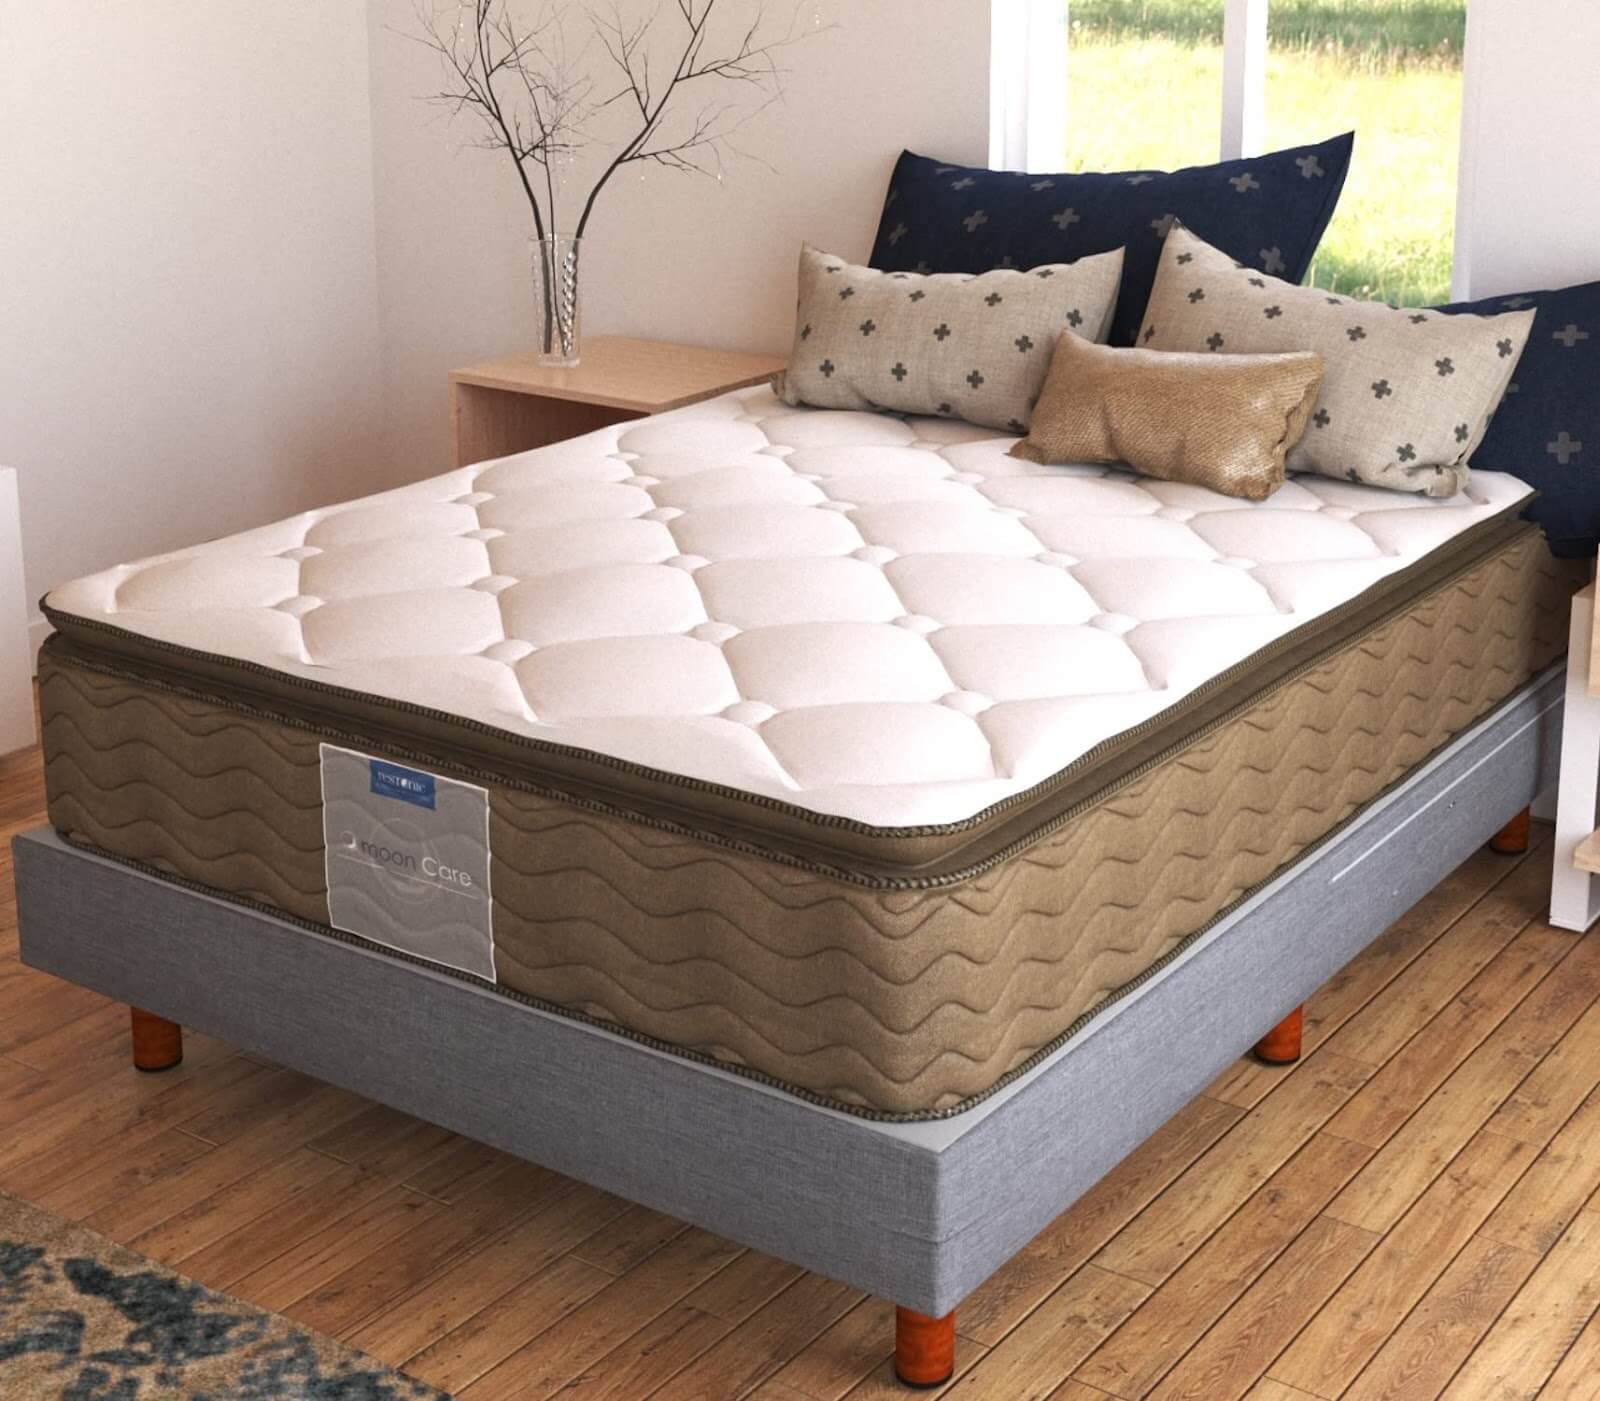  The Restonic mattress offers a comfortable sleep surface